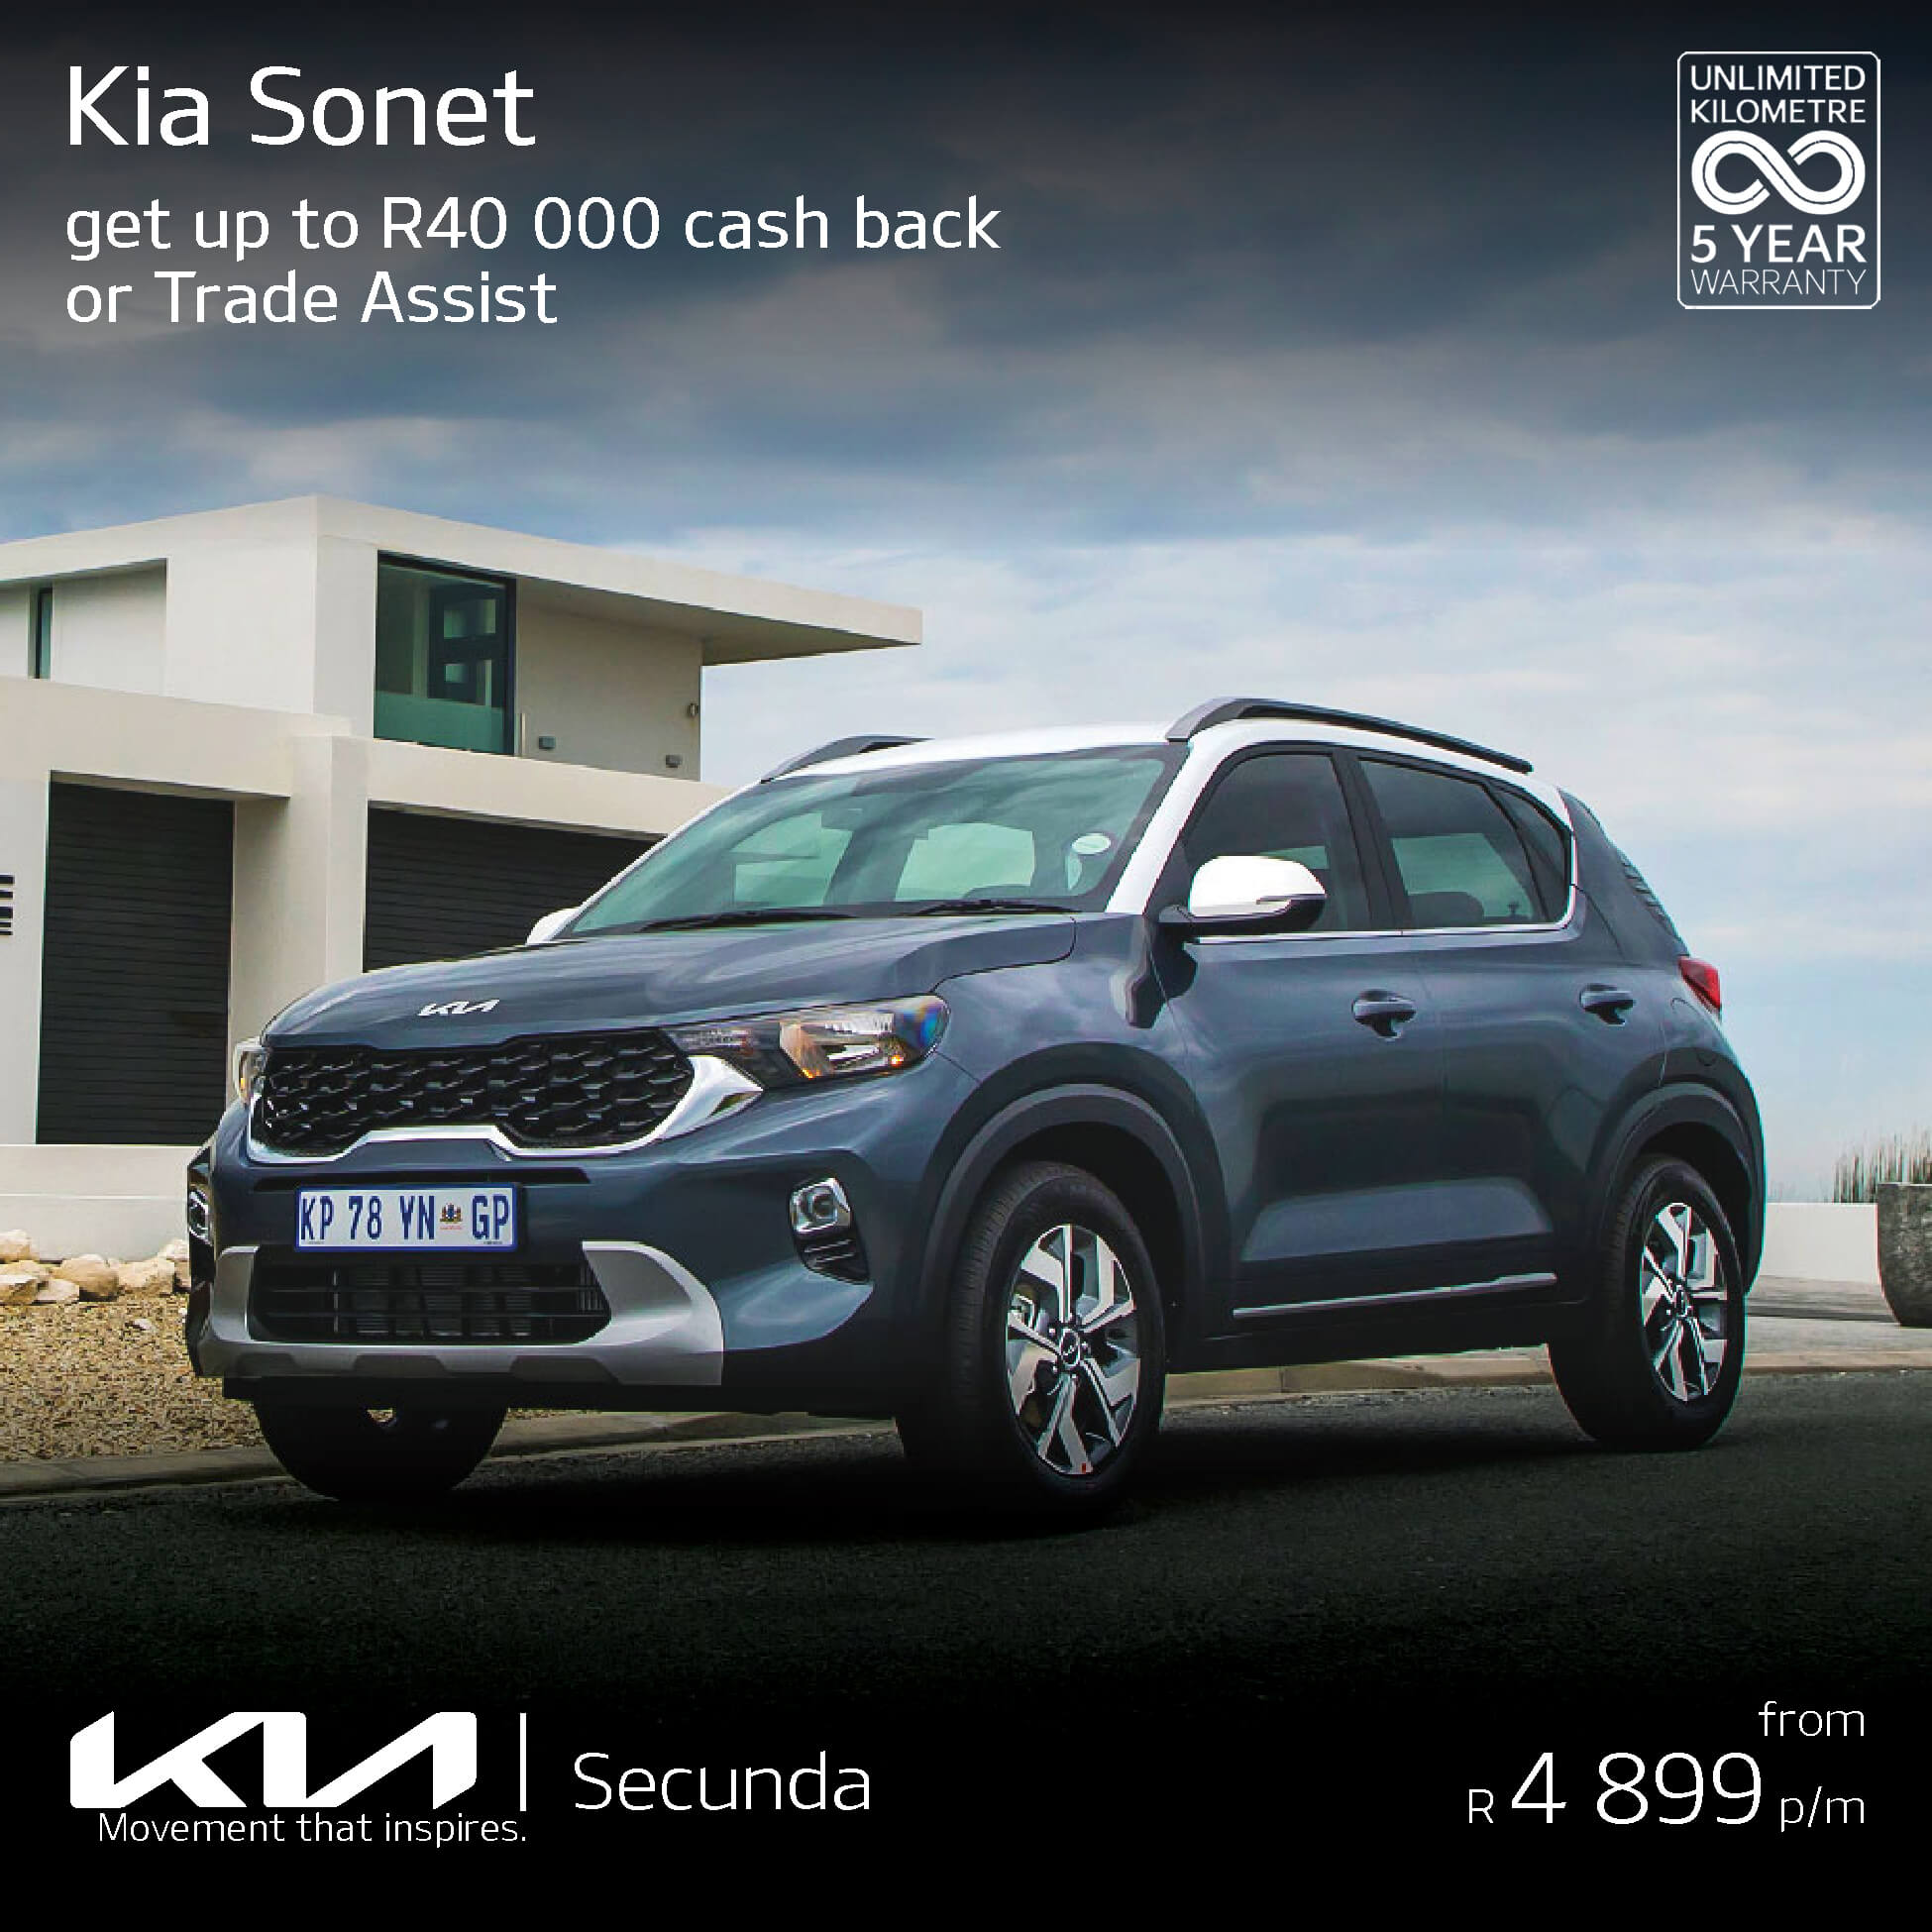 Kia Sonet image from Eastvaal Motors